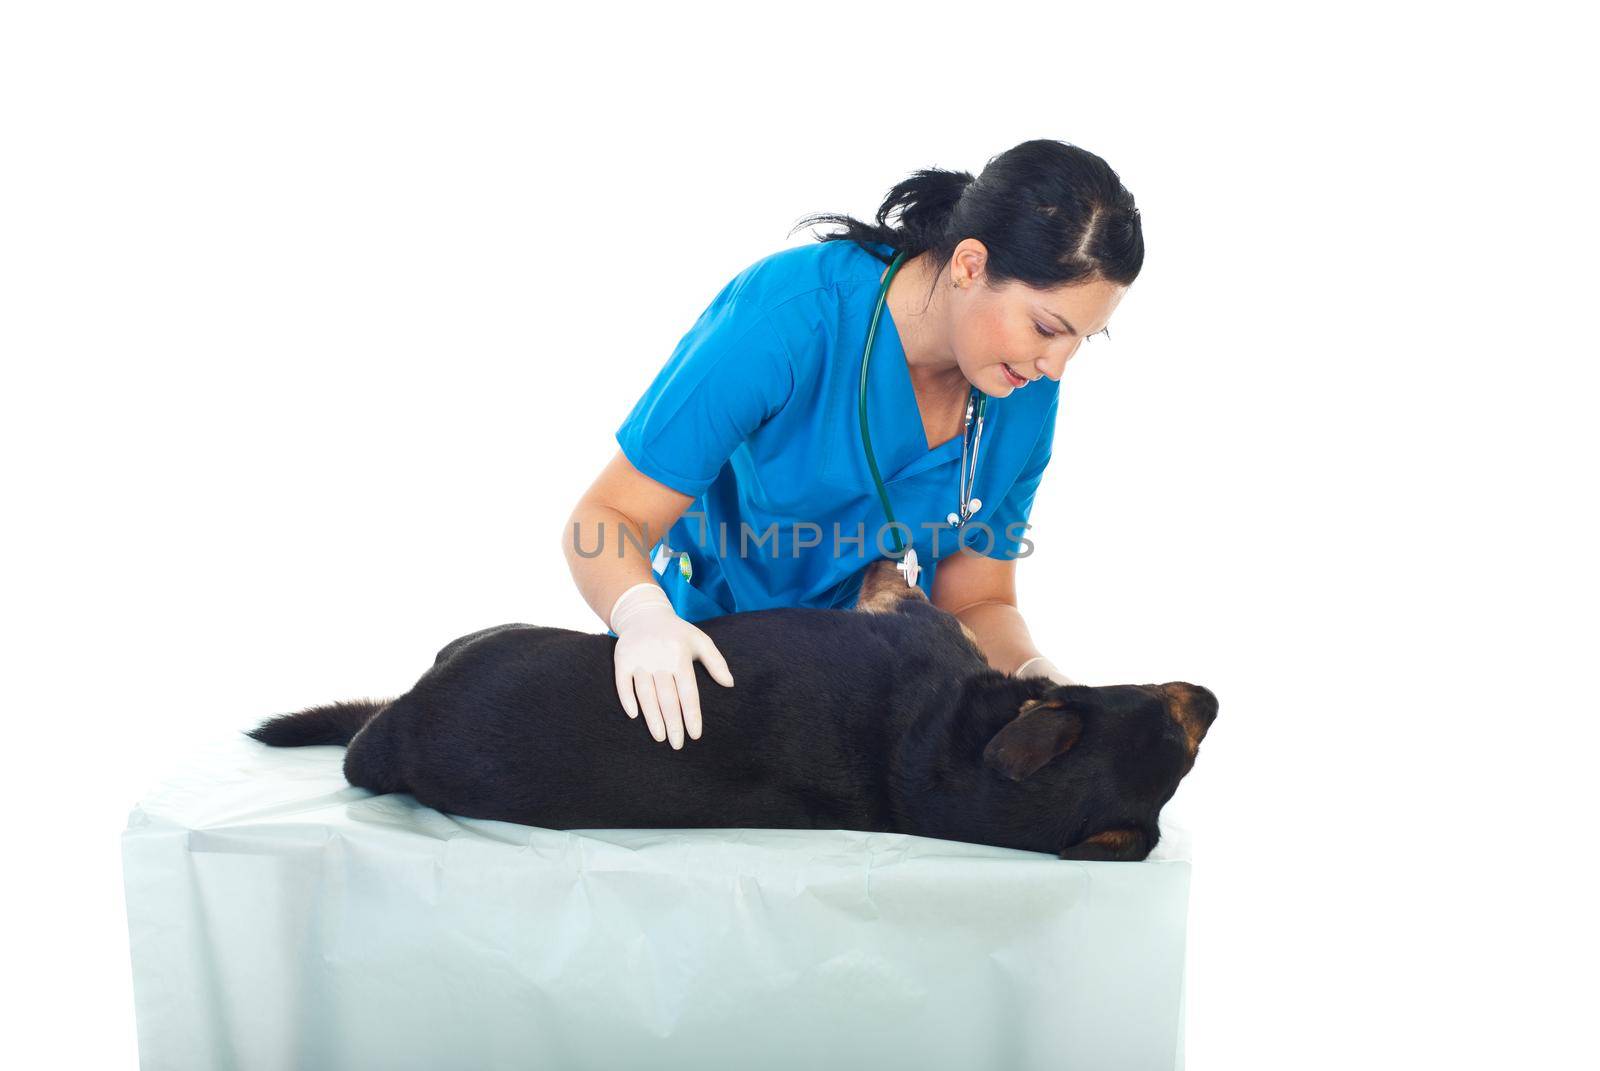 Veterinary examine  dog by justmeyo